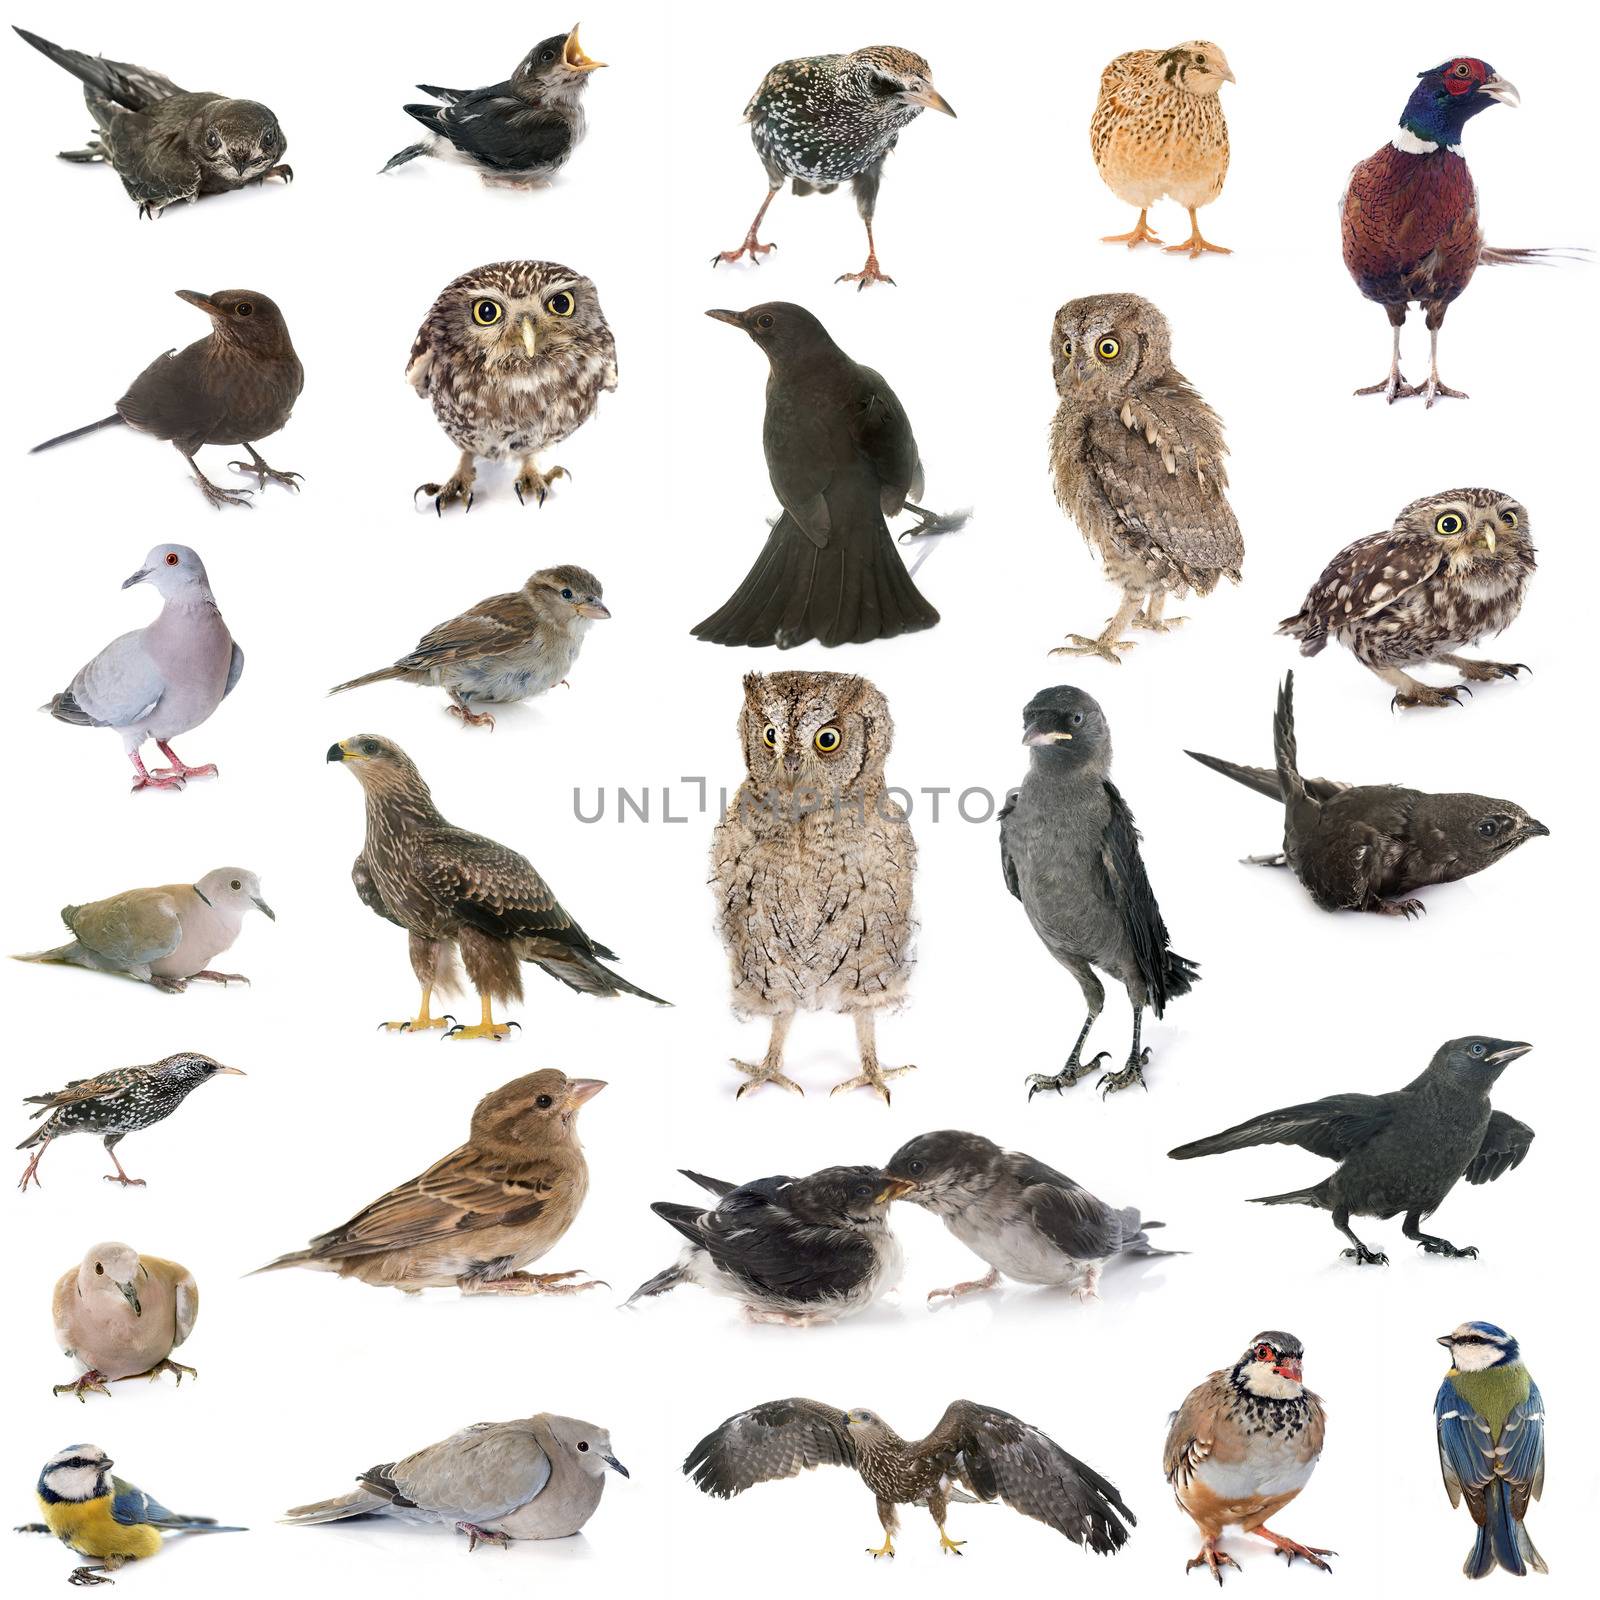 group of wild birds by cynoclub